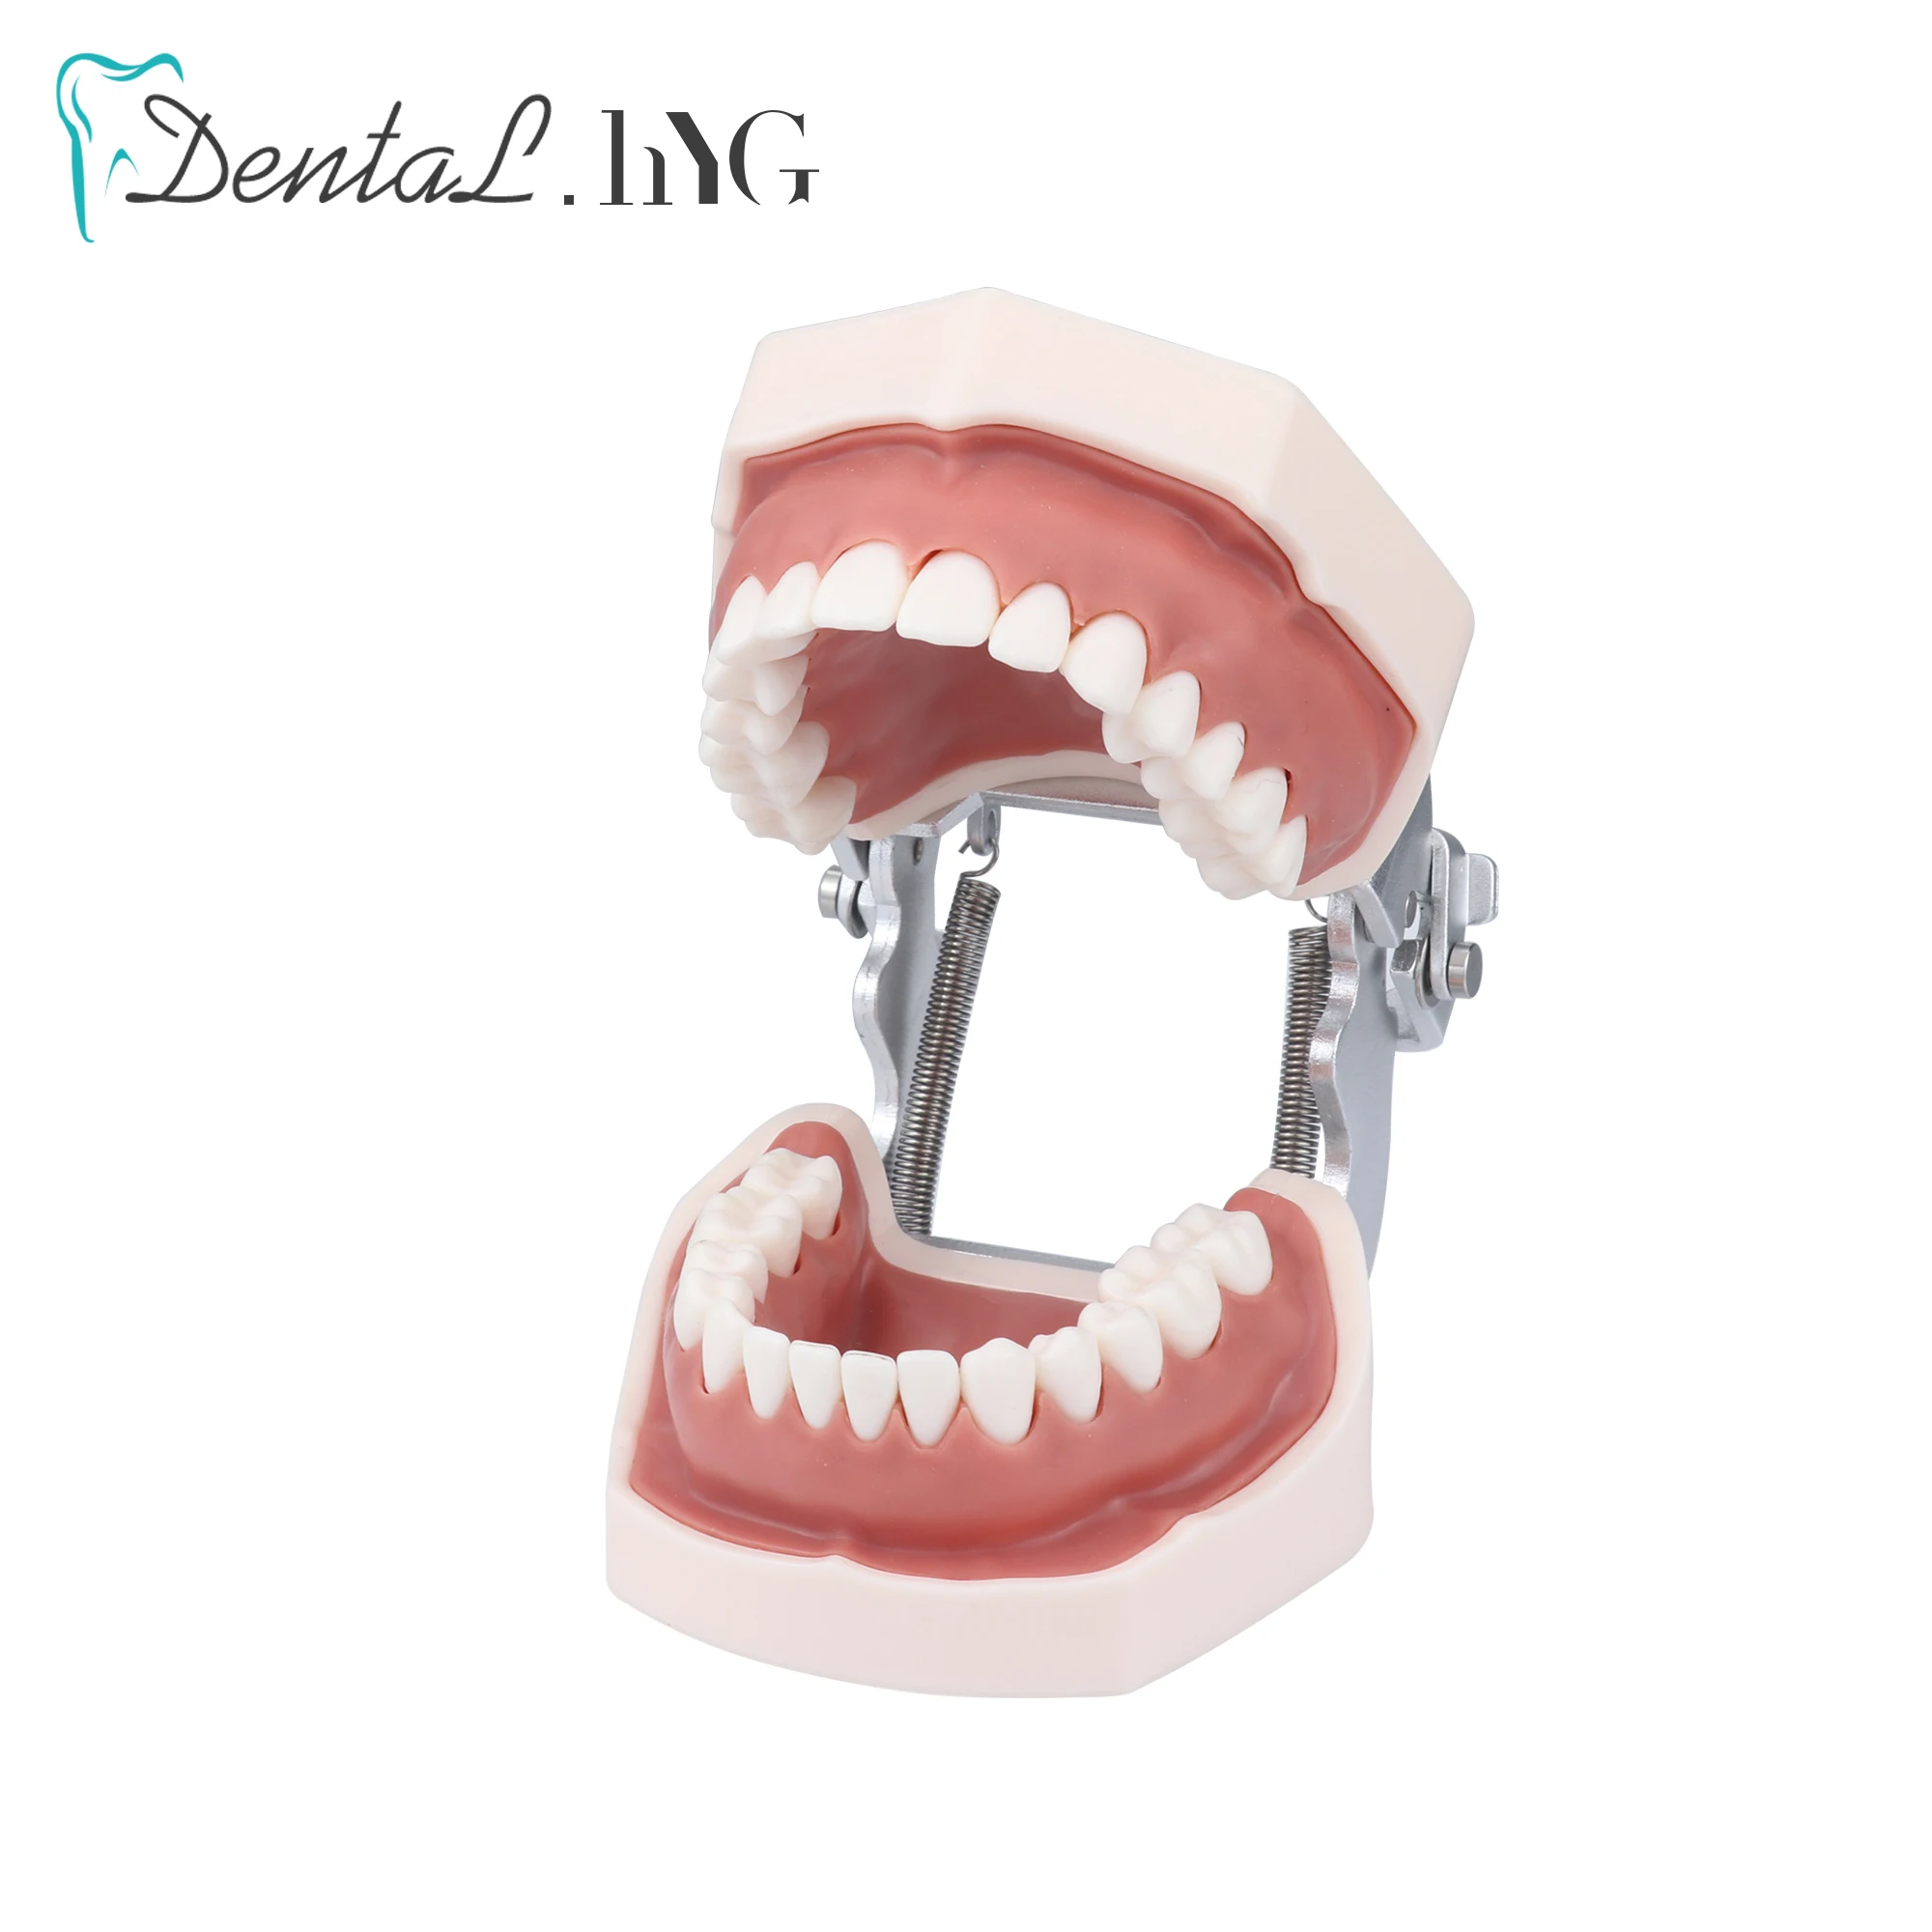 Dental model Teeth model gum teeth Teaching Model Standard Dental Typodont Model Demonstration With Removable Tooth 28Pcs